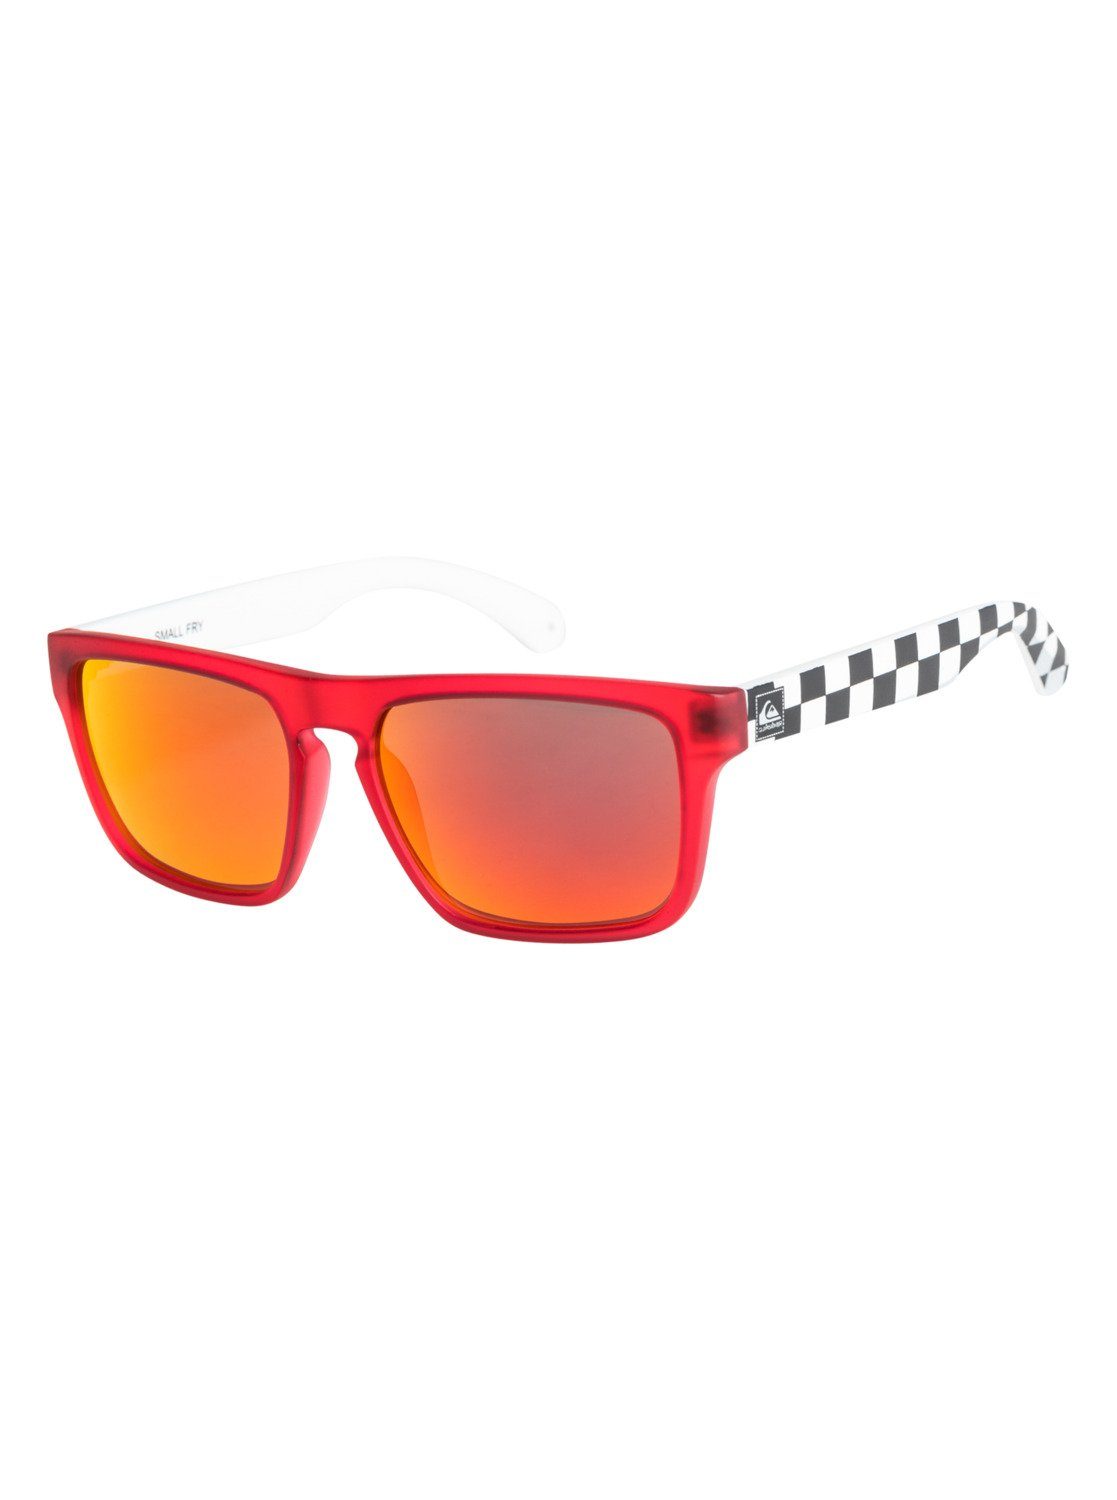 Quiksilver Sonnenbrille Small Fry, Spritzgegossener G850-Rahmen